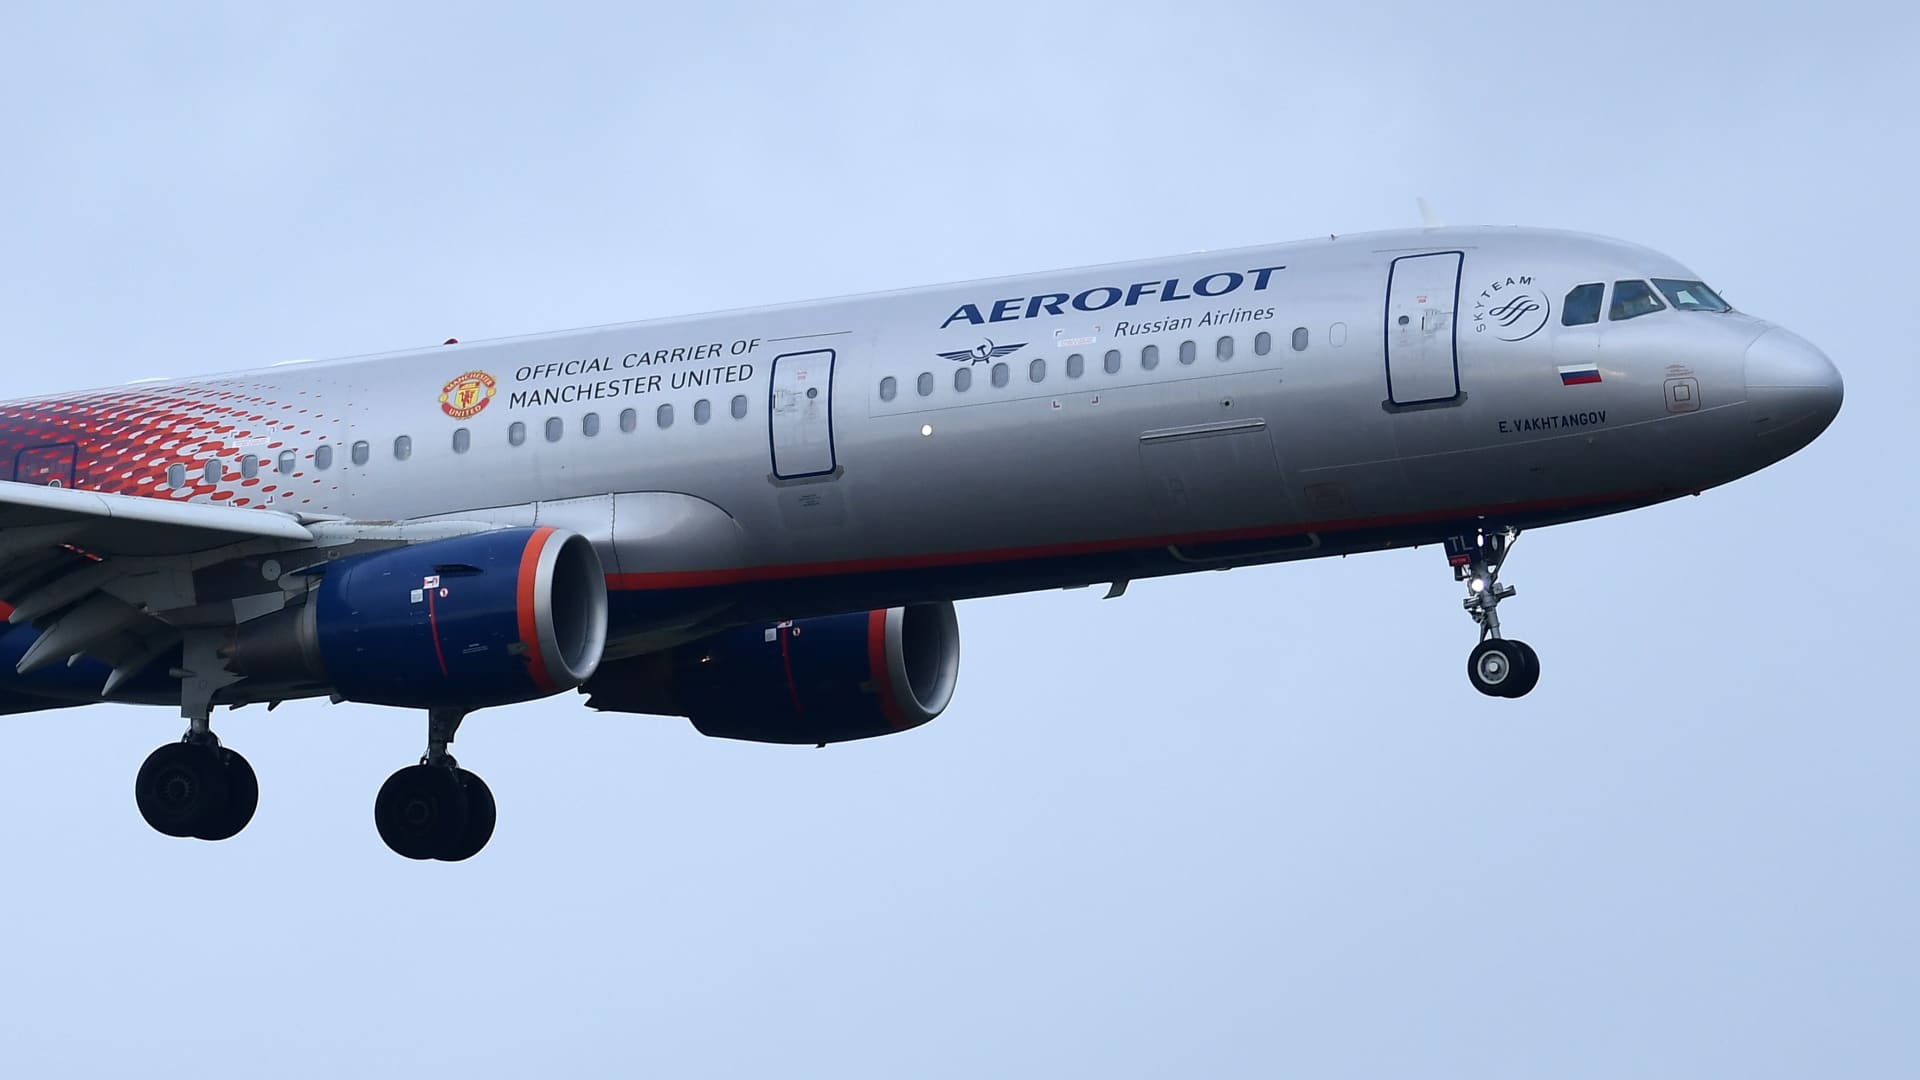 Airbus A321 Aeroflot official carrier Manchester United. Aircraft to Fiumicino Leonardo da Vinci Airport. Fiumicino, November 11th, 2021